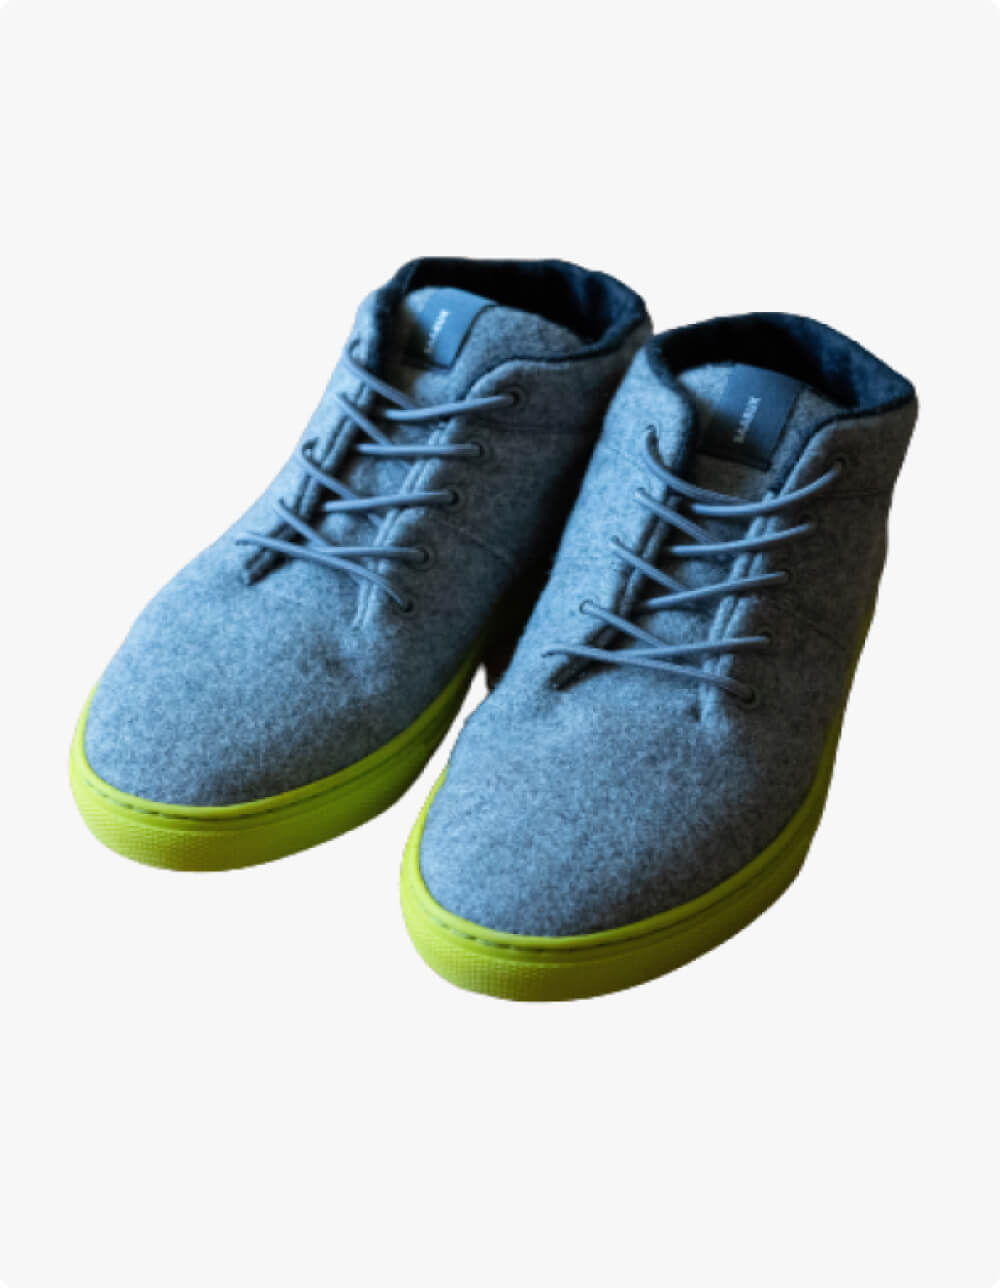 raja footwear shoe